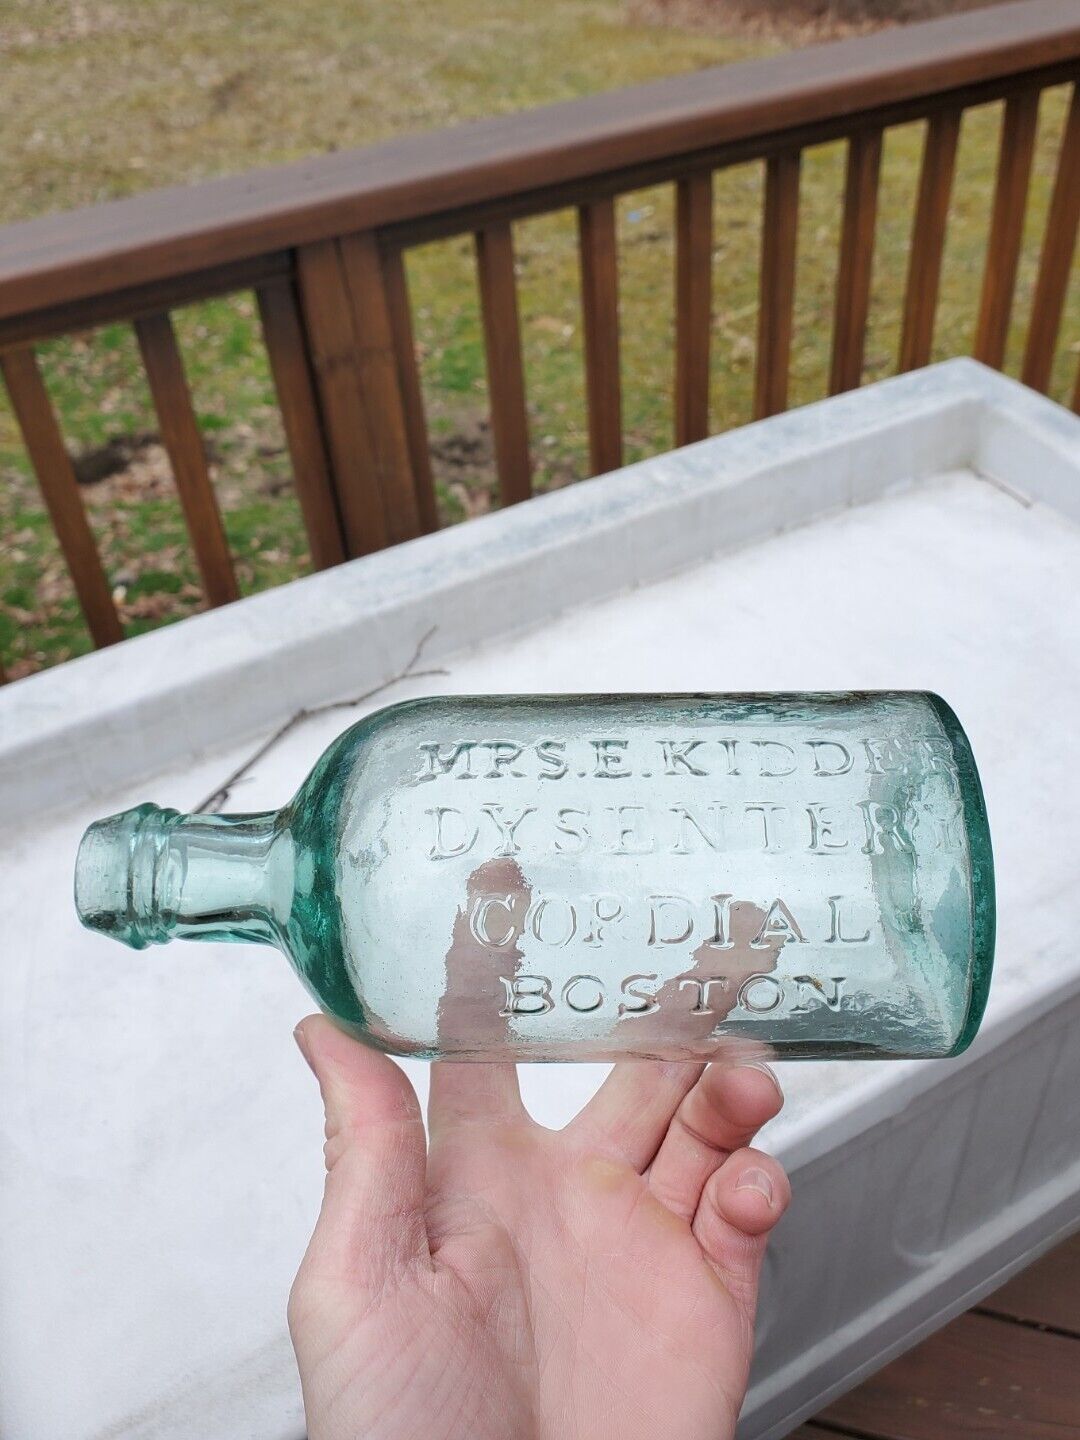 Aqua 1850s Mrs. E Kidder Dysentery Cordial Boston MA Pontil Medicine Bottle